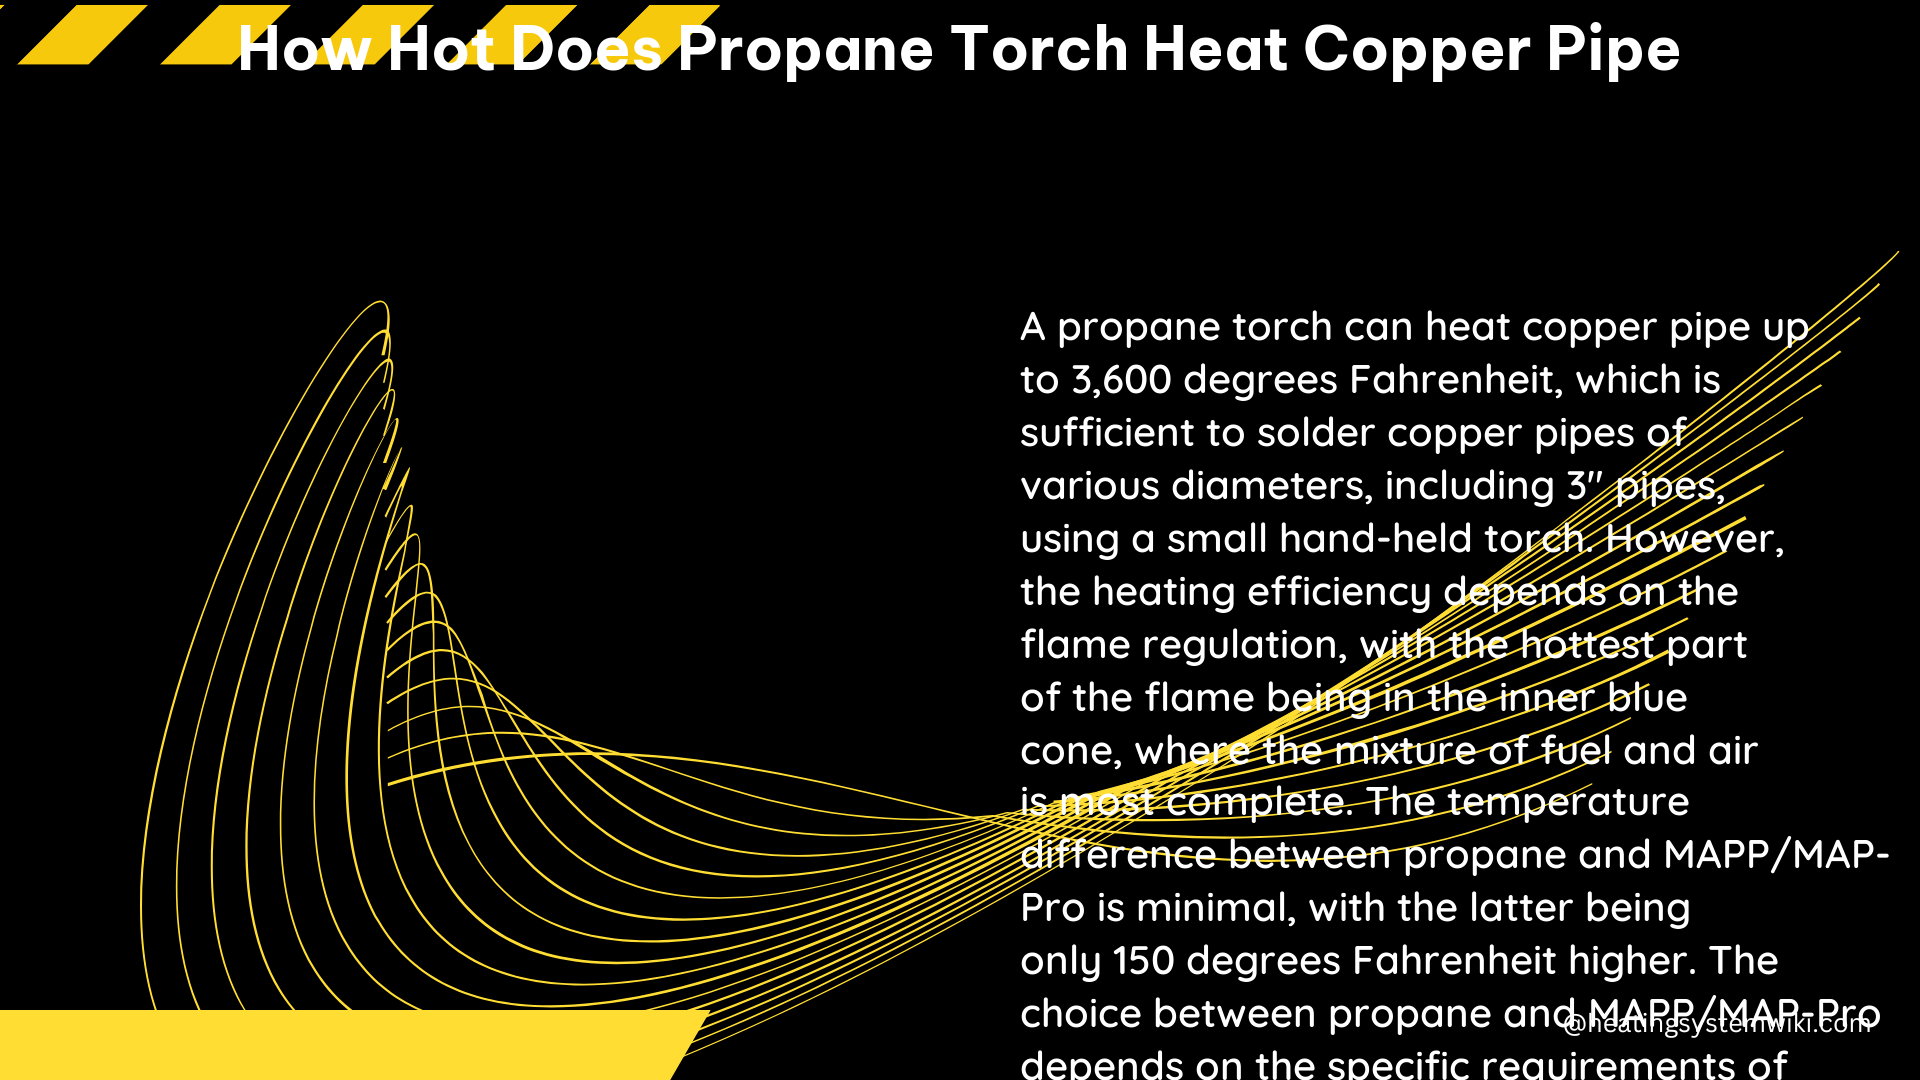 How Hot Does a Propane Torch Heat Copper Pipe? - heatingsystemwiki.com